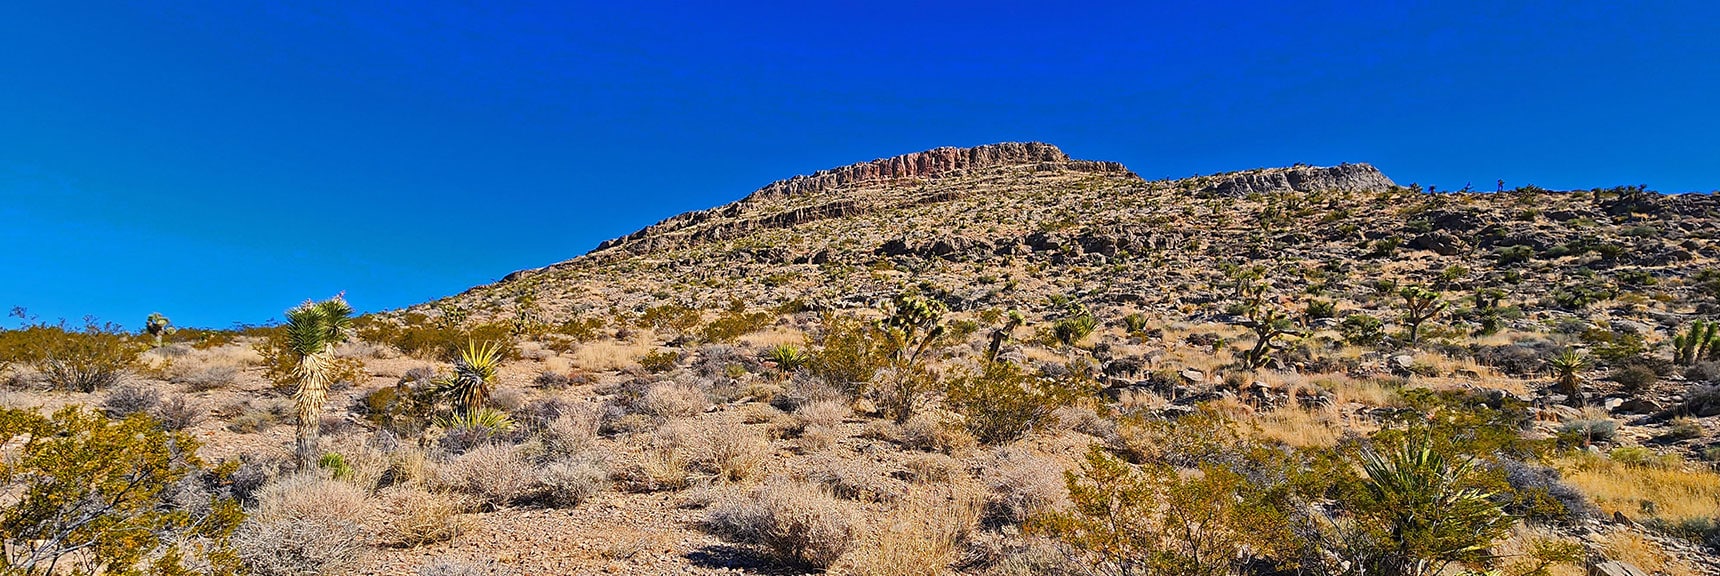 Rounding Southwestern Corner of Bluff | Landmark Bluff | Lovell Canyon, Nevada